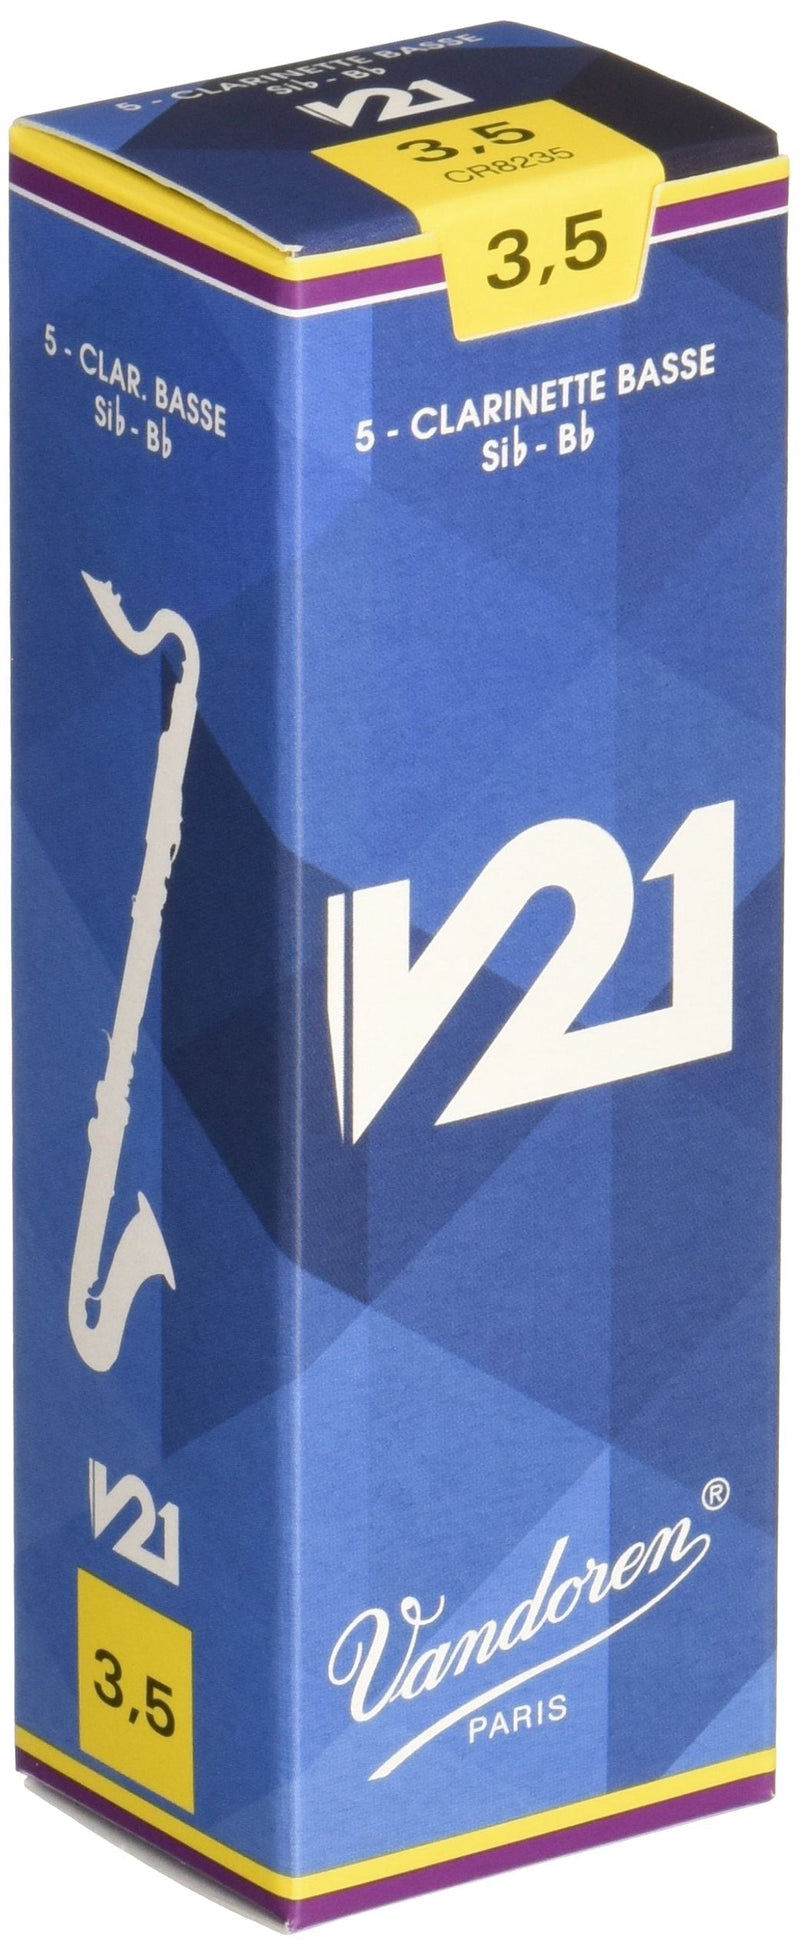 Vandoren CR8235 Bass Clarinet V21 Reeds Strength 3.5, Box of 5